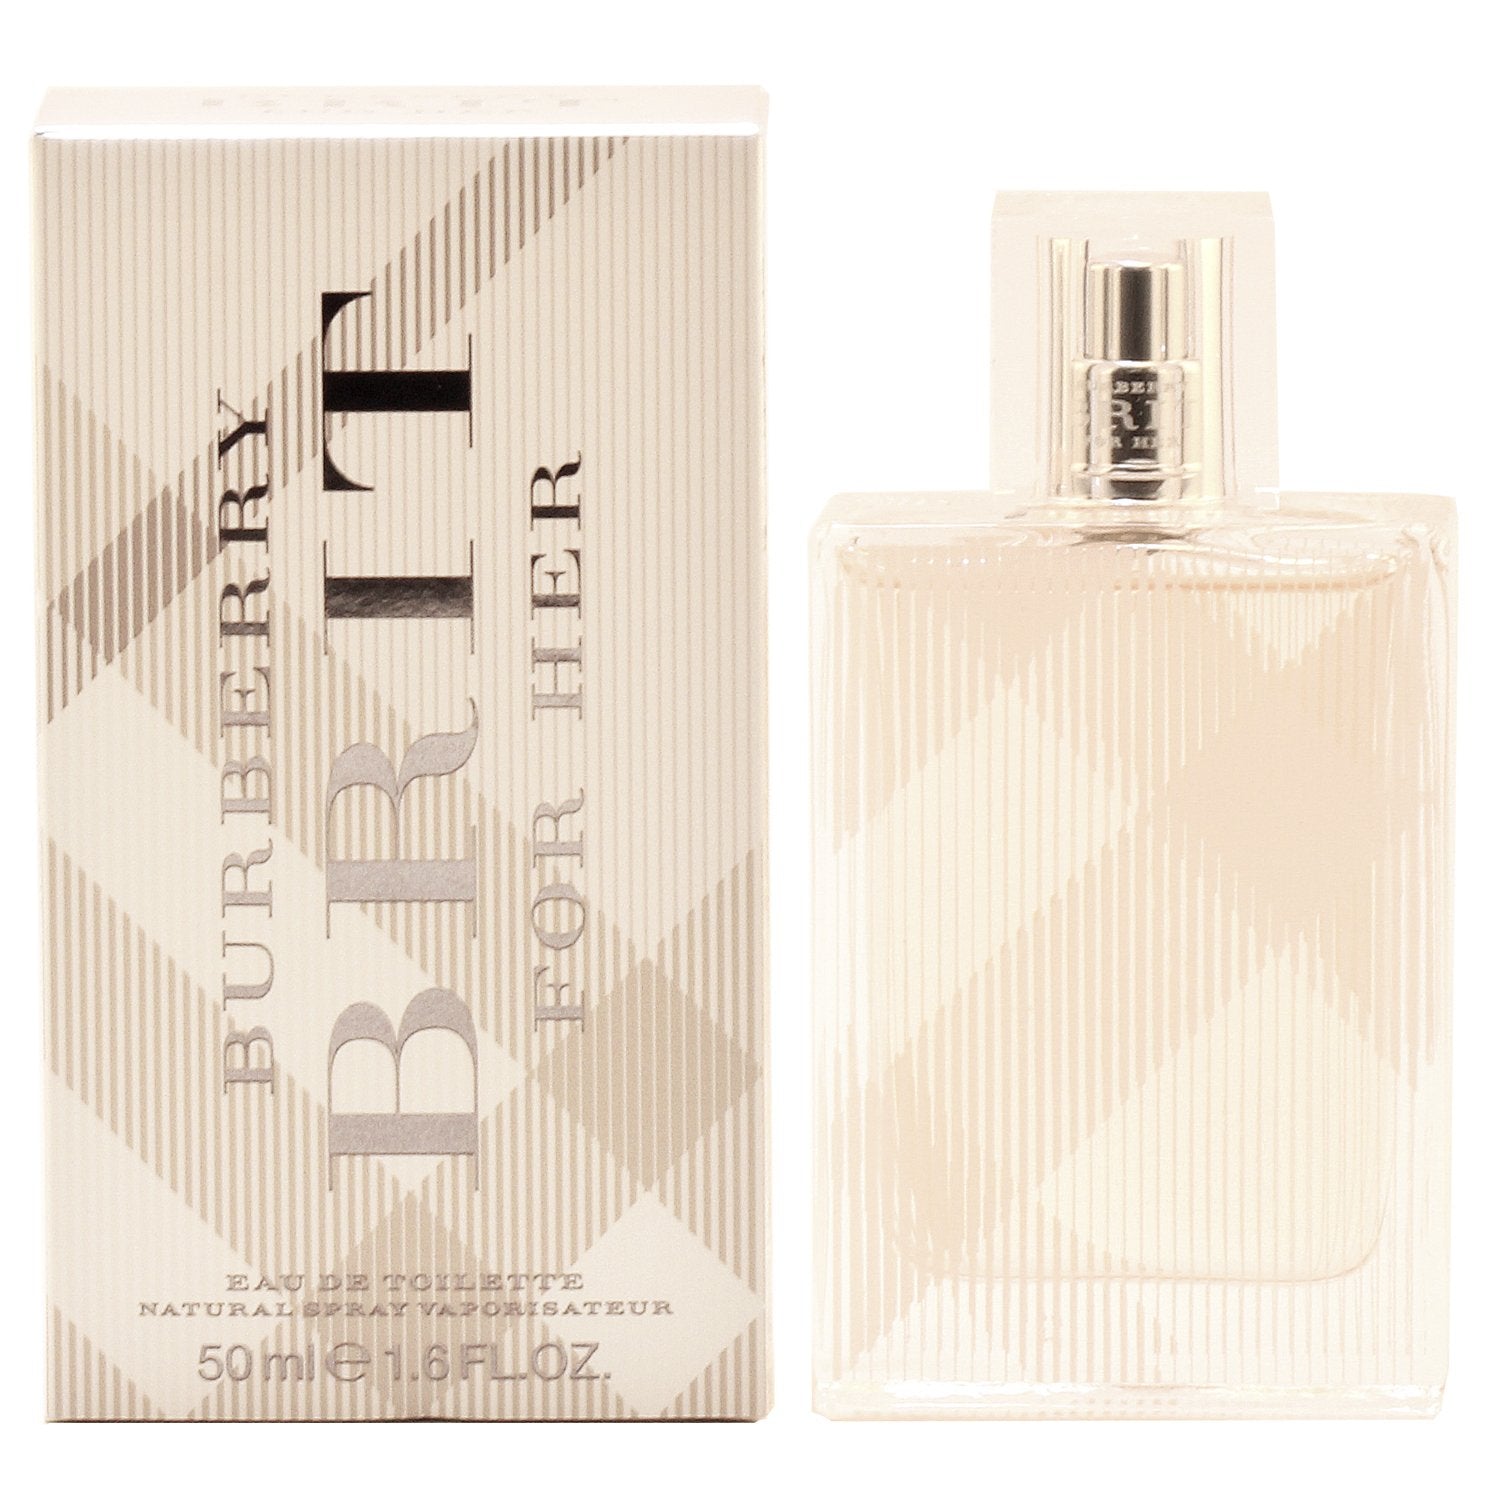 BURBERRY BRIT FOR WOMEN - TOILETTE SPRAY DE Room – EAU Fragrance